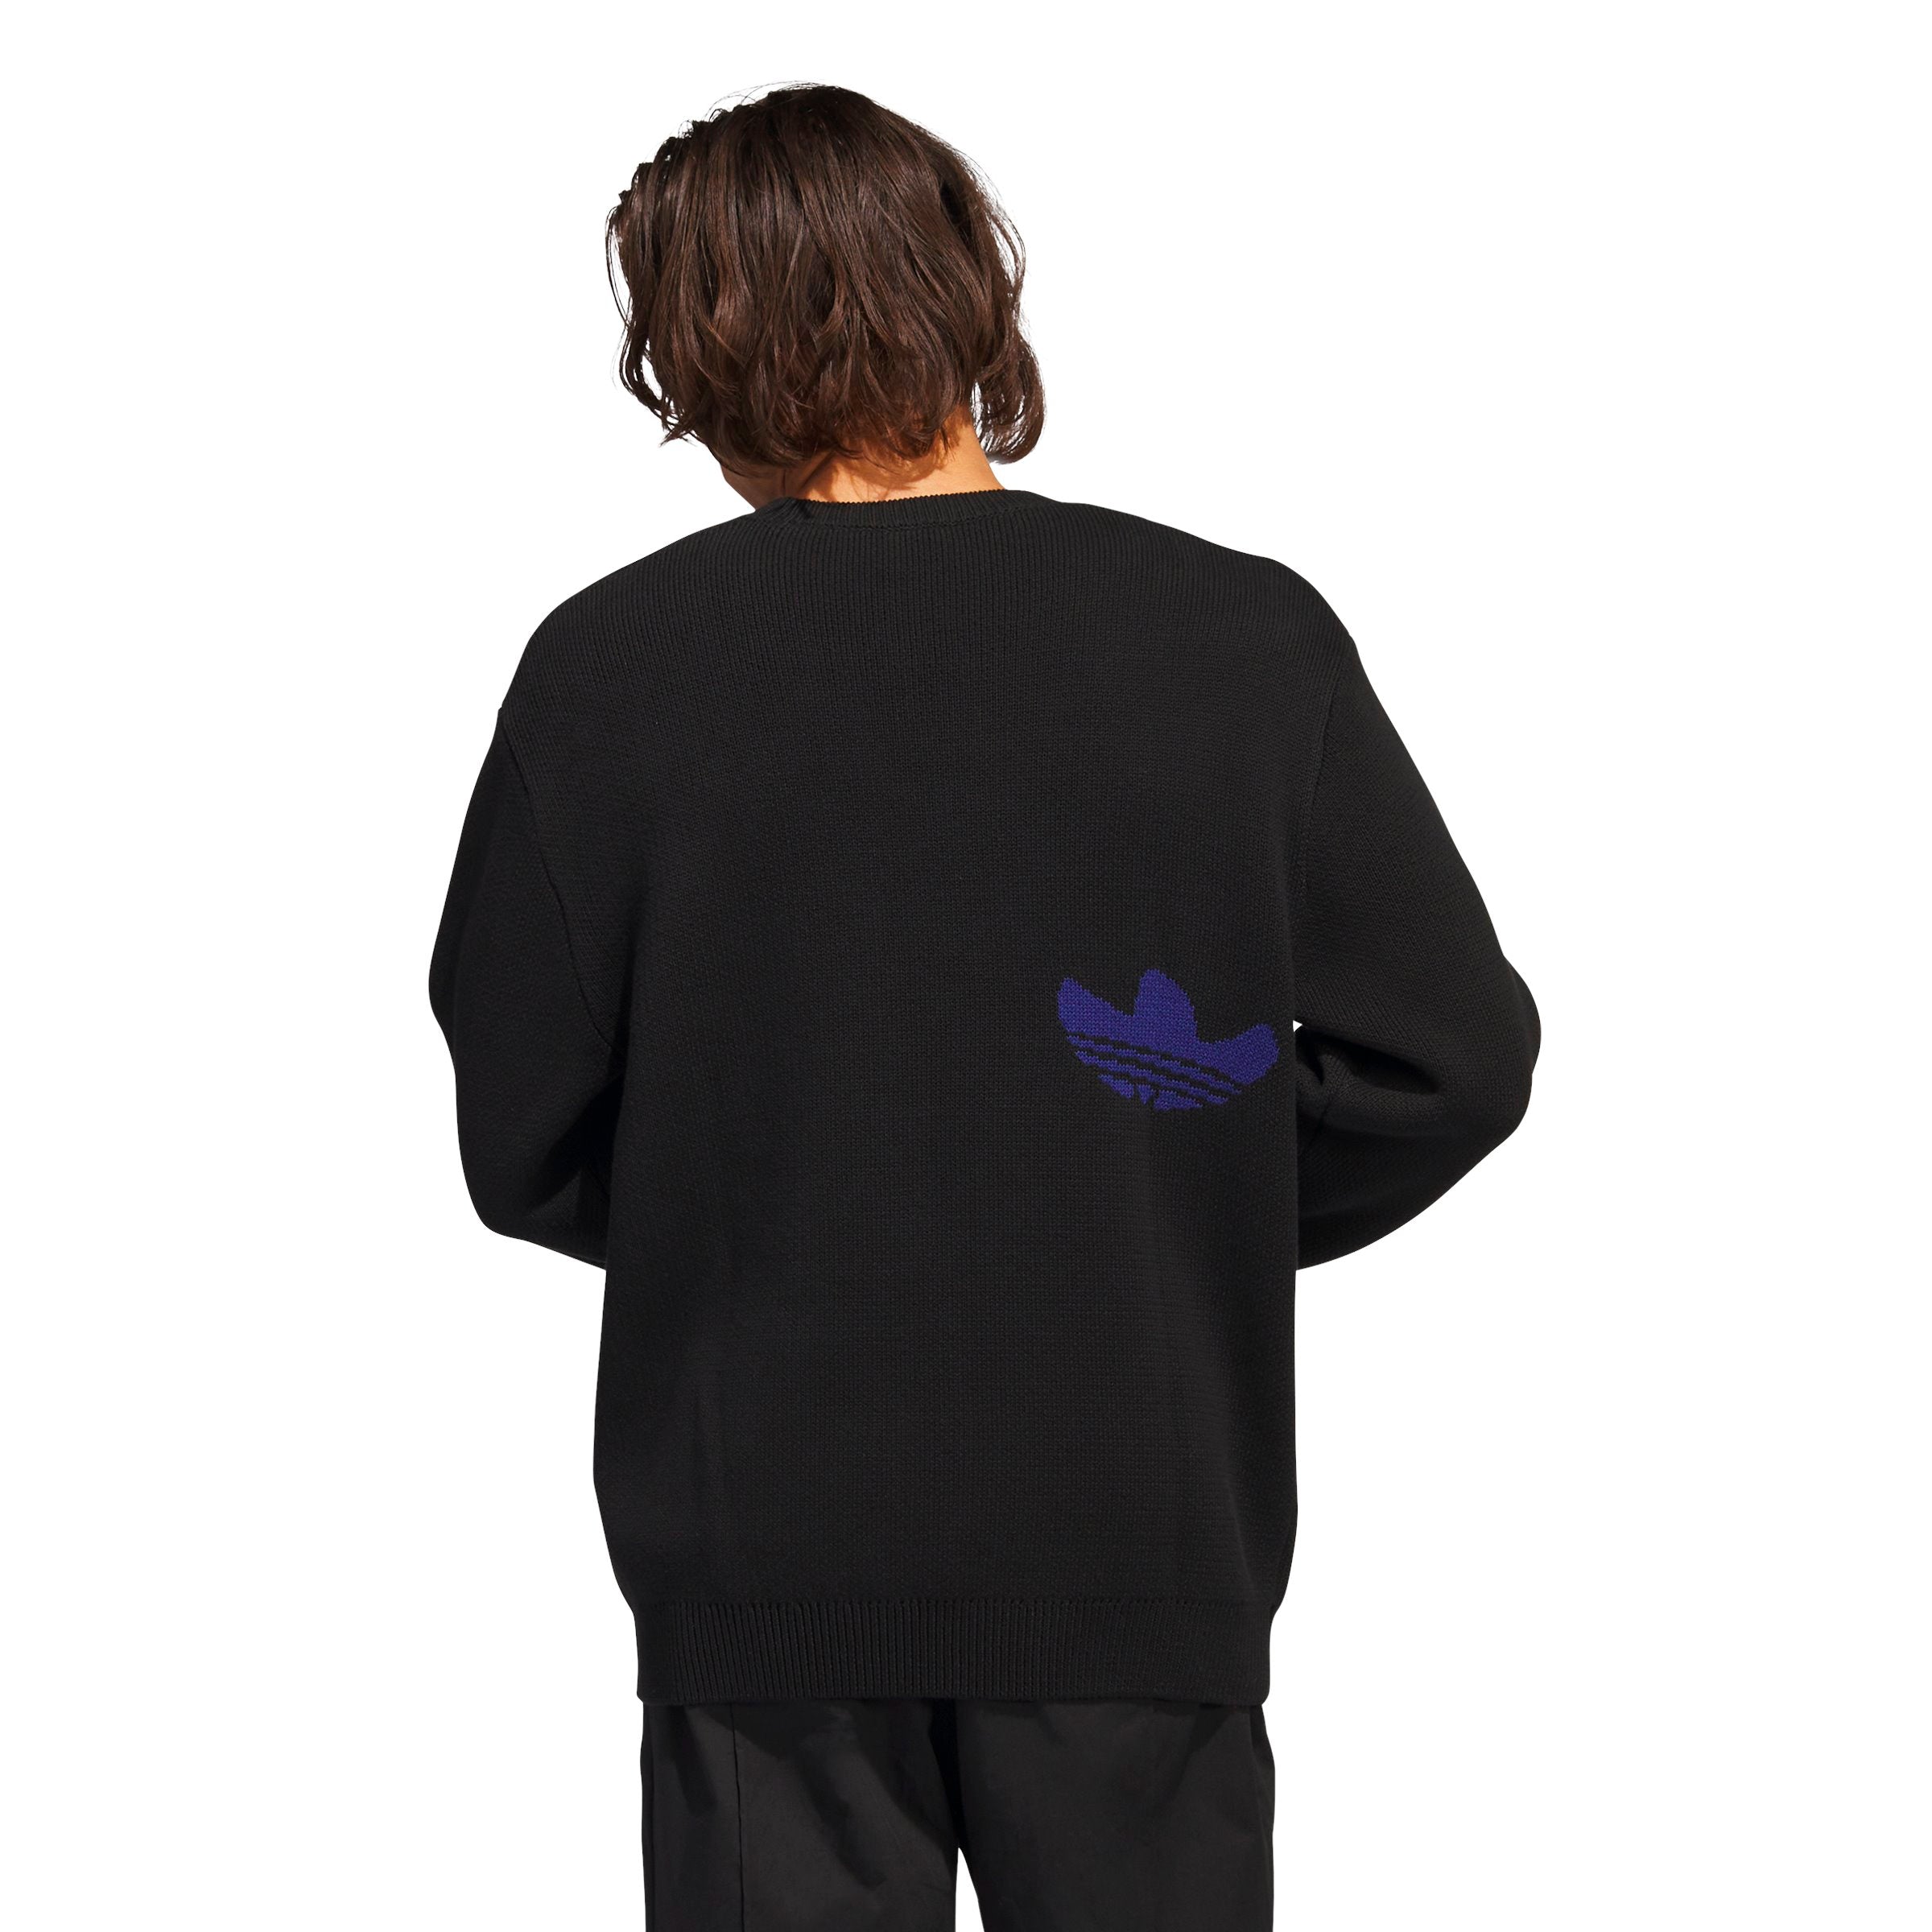 Adidas Shmoo Knit Sweater - Black Sweater adidas Skateboarding 